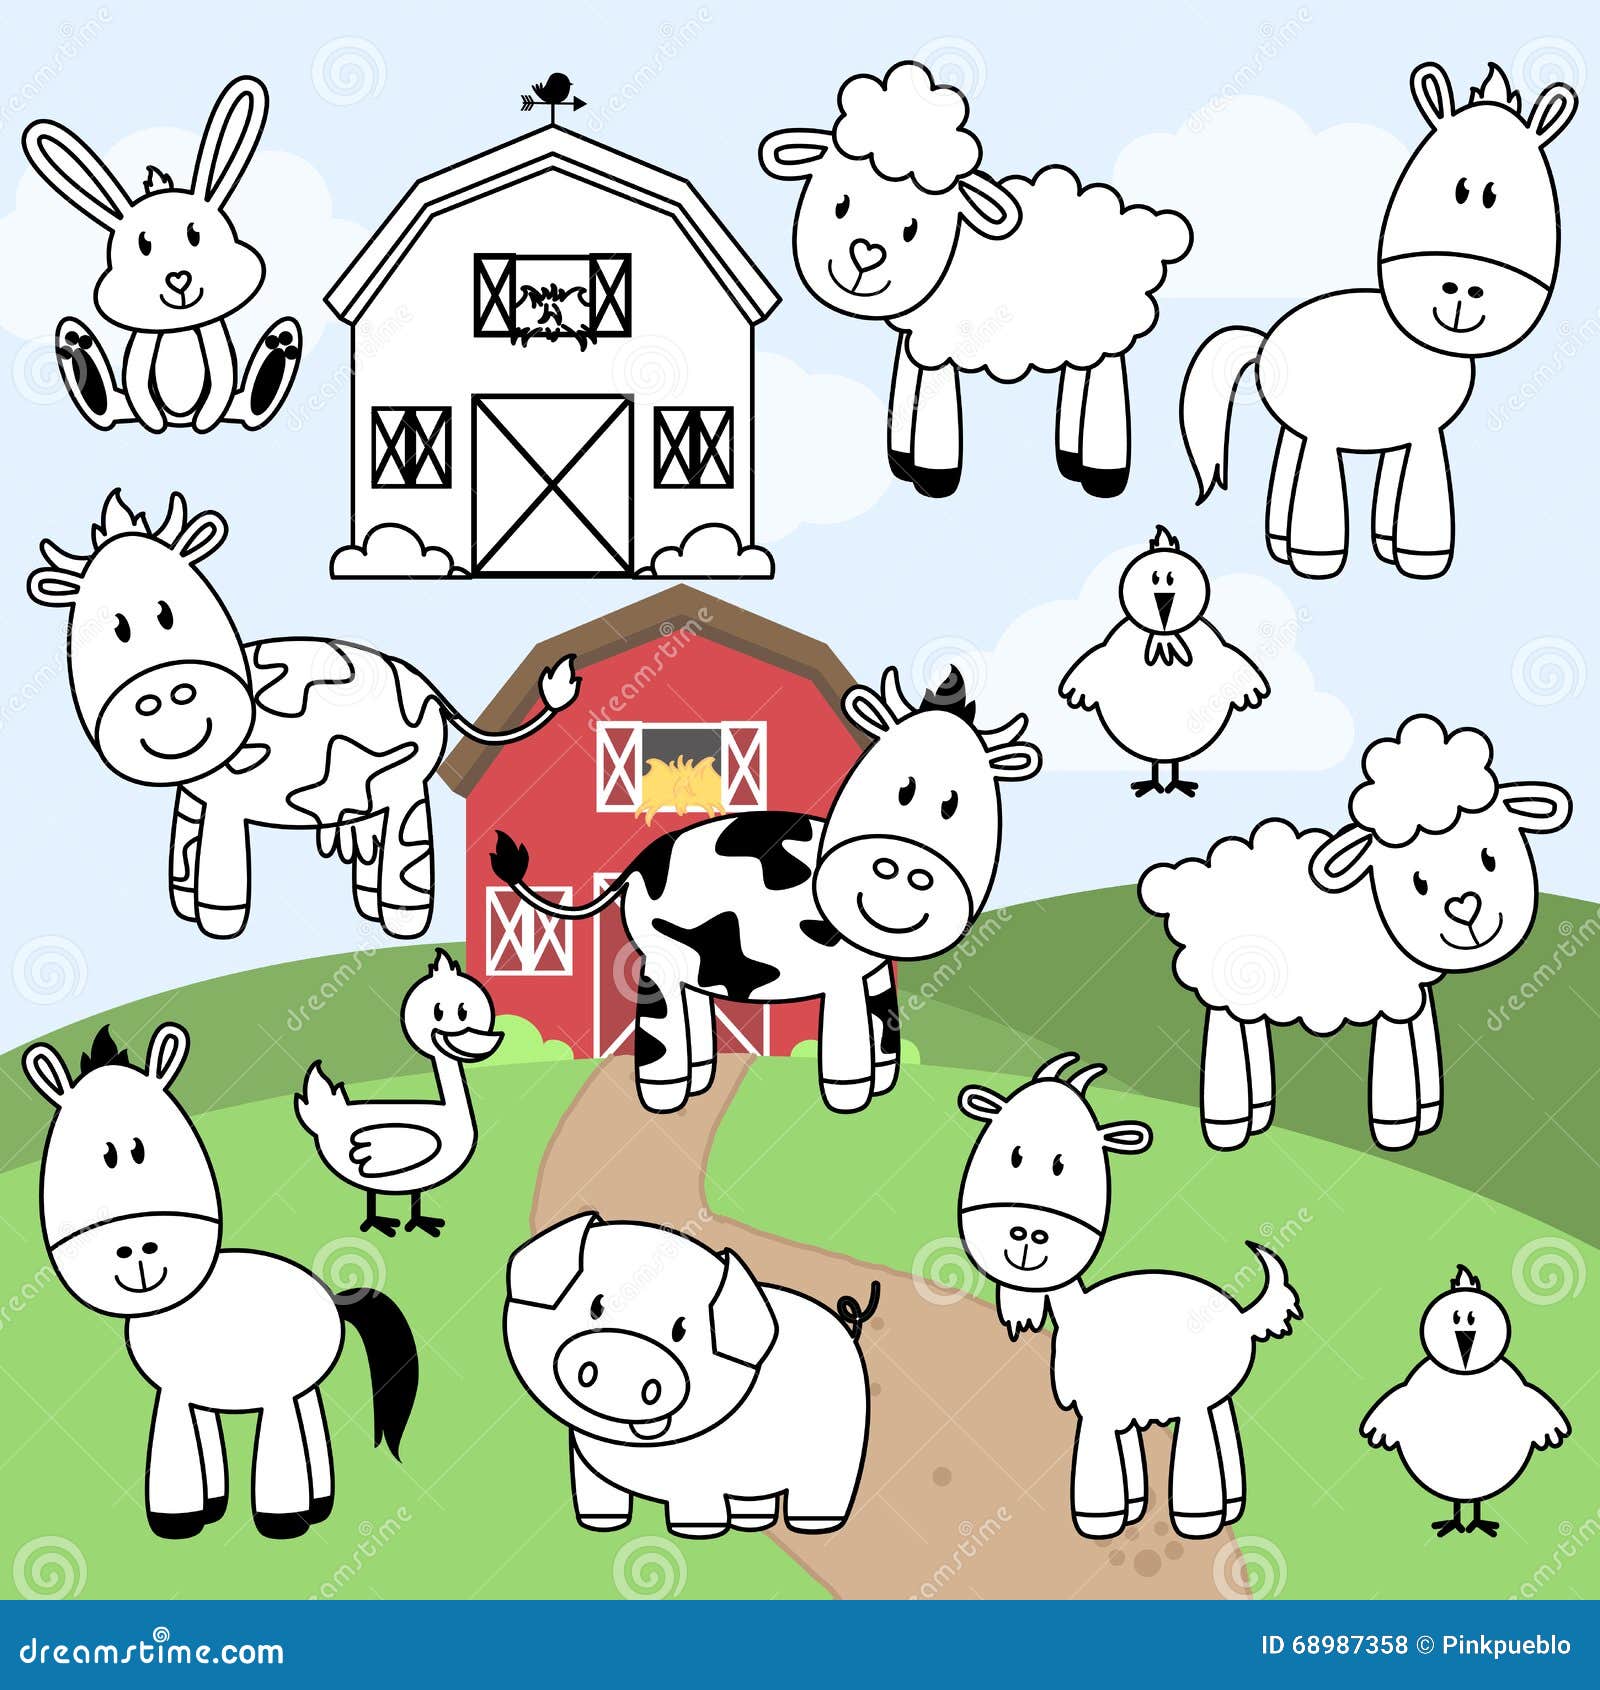 Share 124+ farm animals drawing